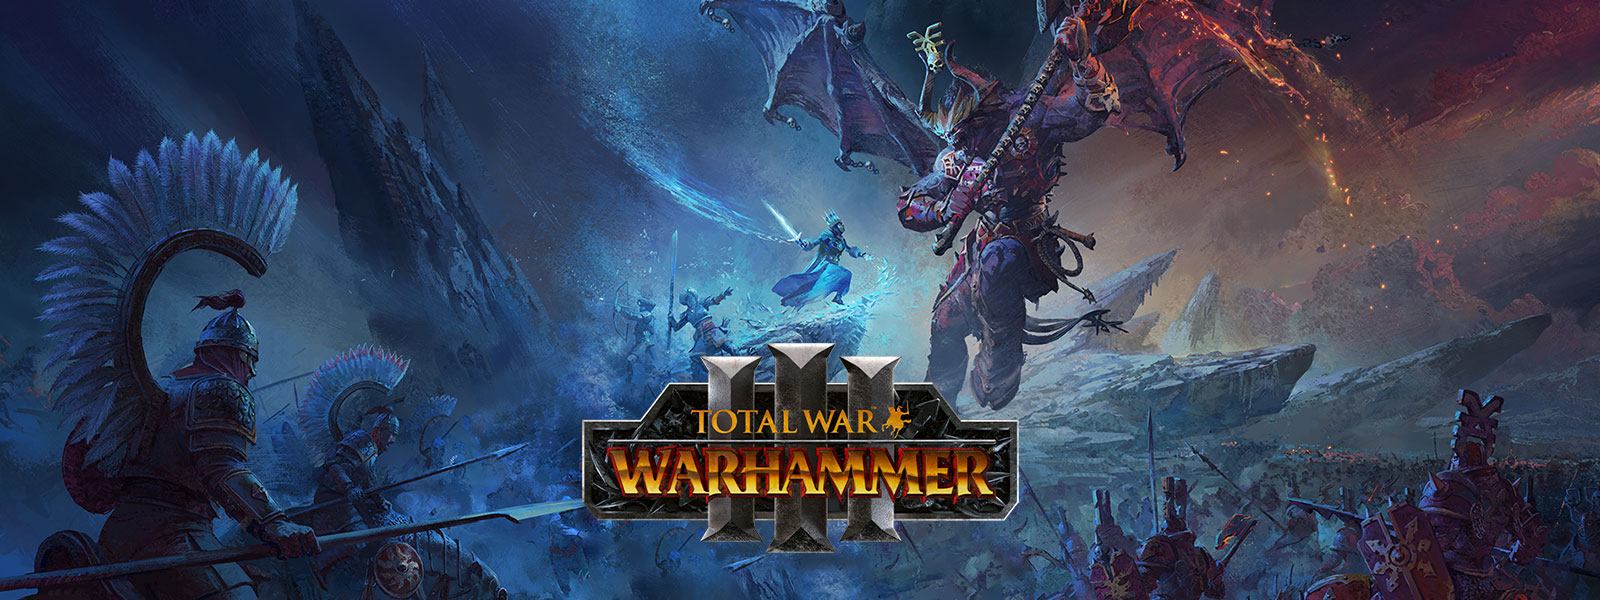 Total War Warhammer 3, Un mago de hielo se enfrenta a un dragón demonio gigante sobre un campo de batalla.